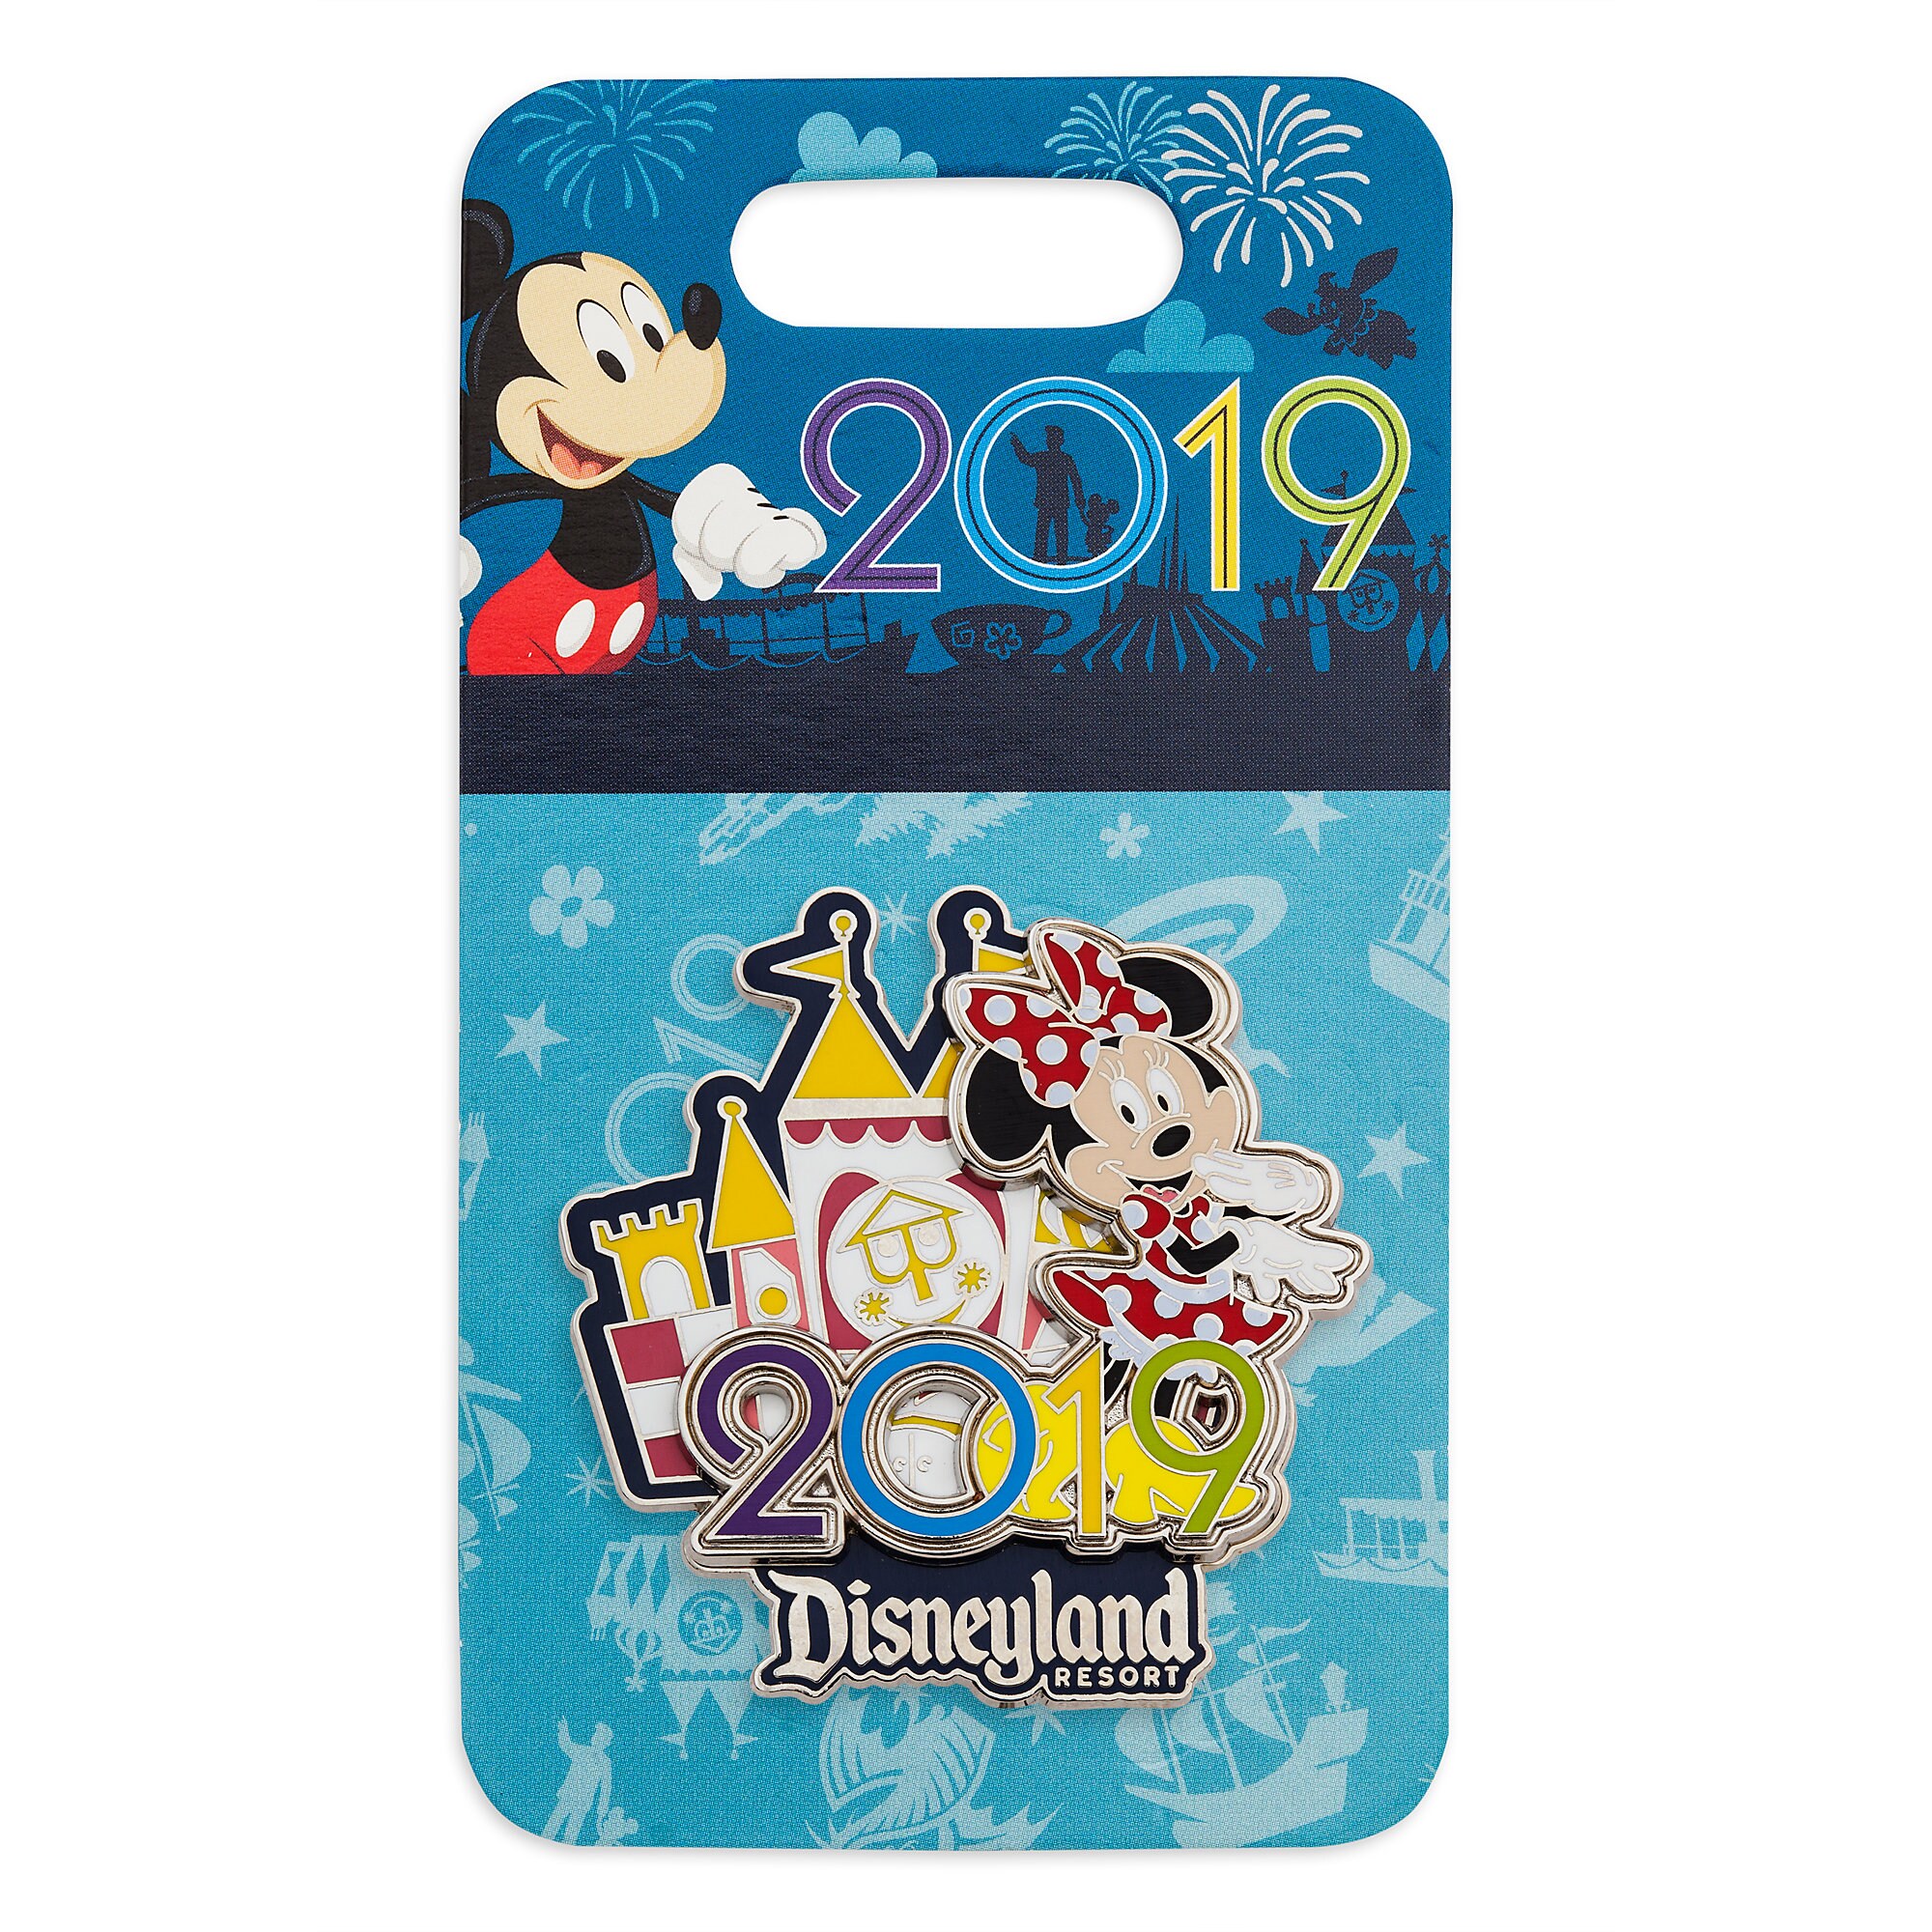 Minnie Mouse Disneyland 2019 Pin